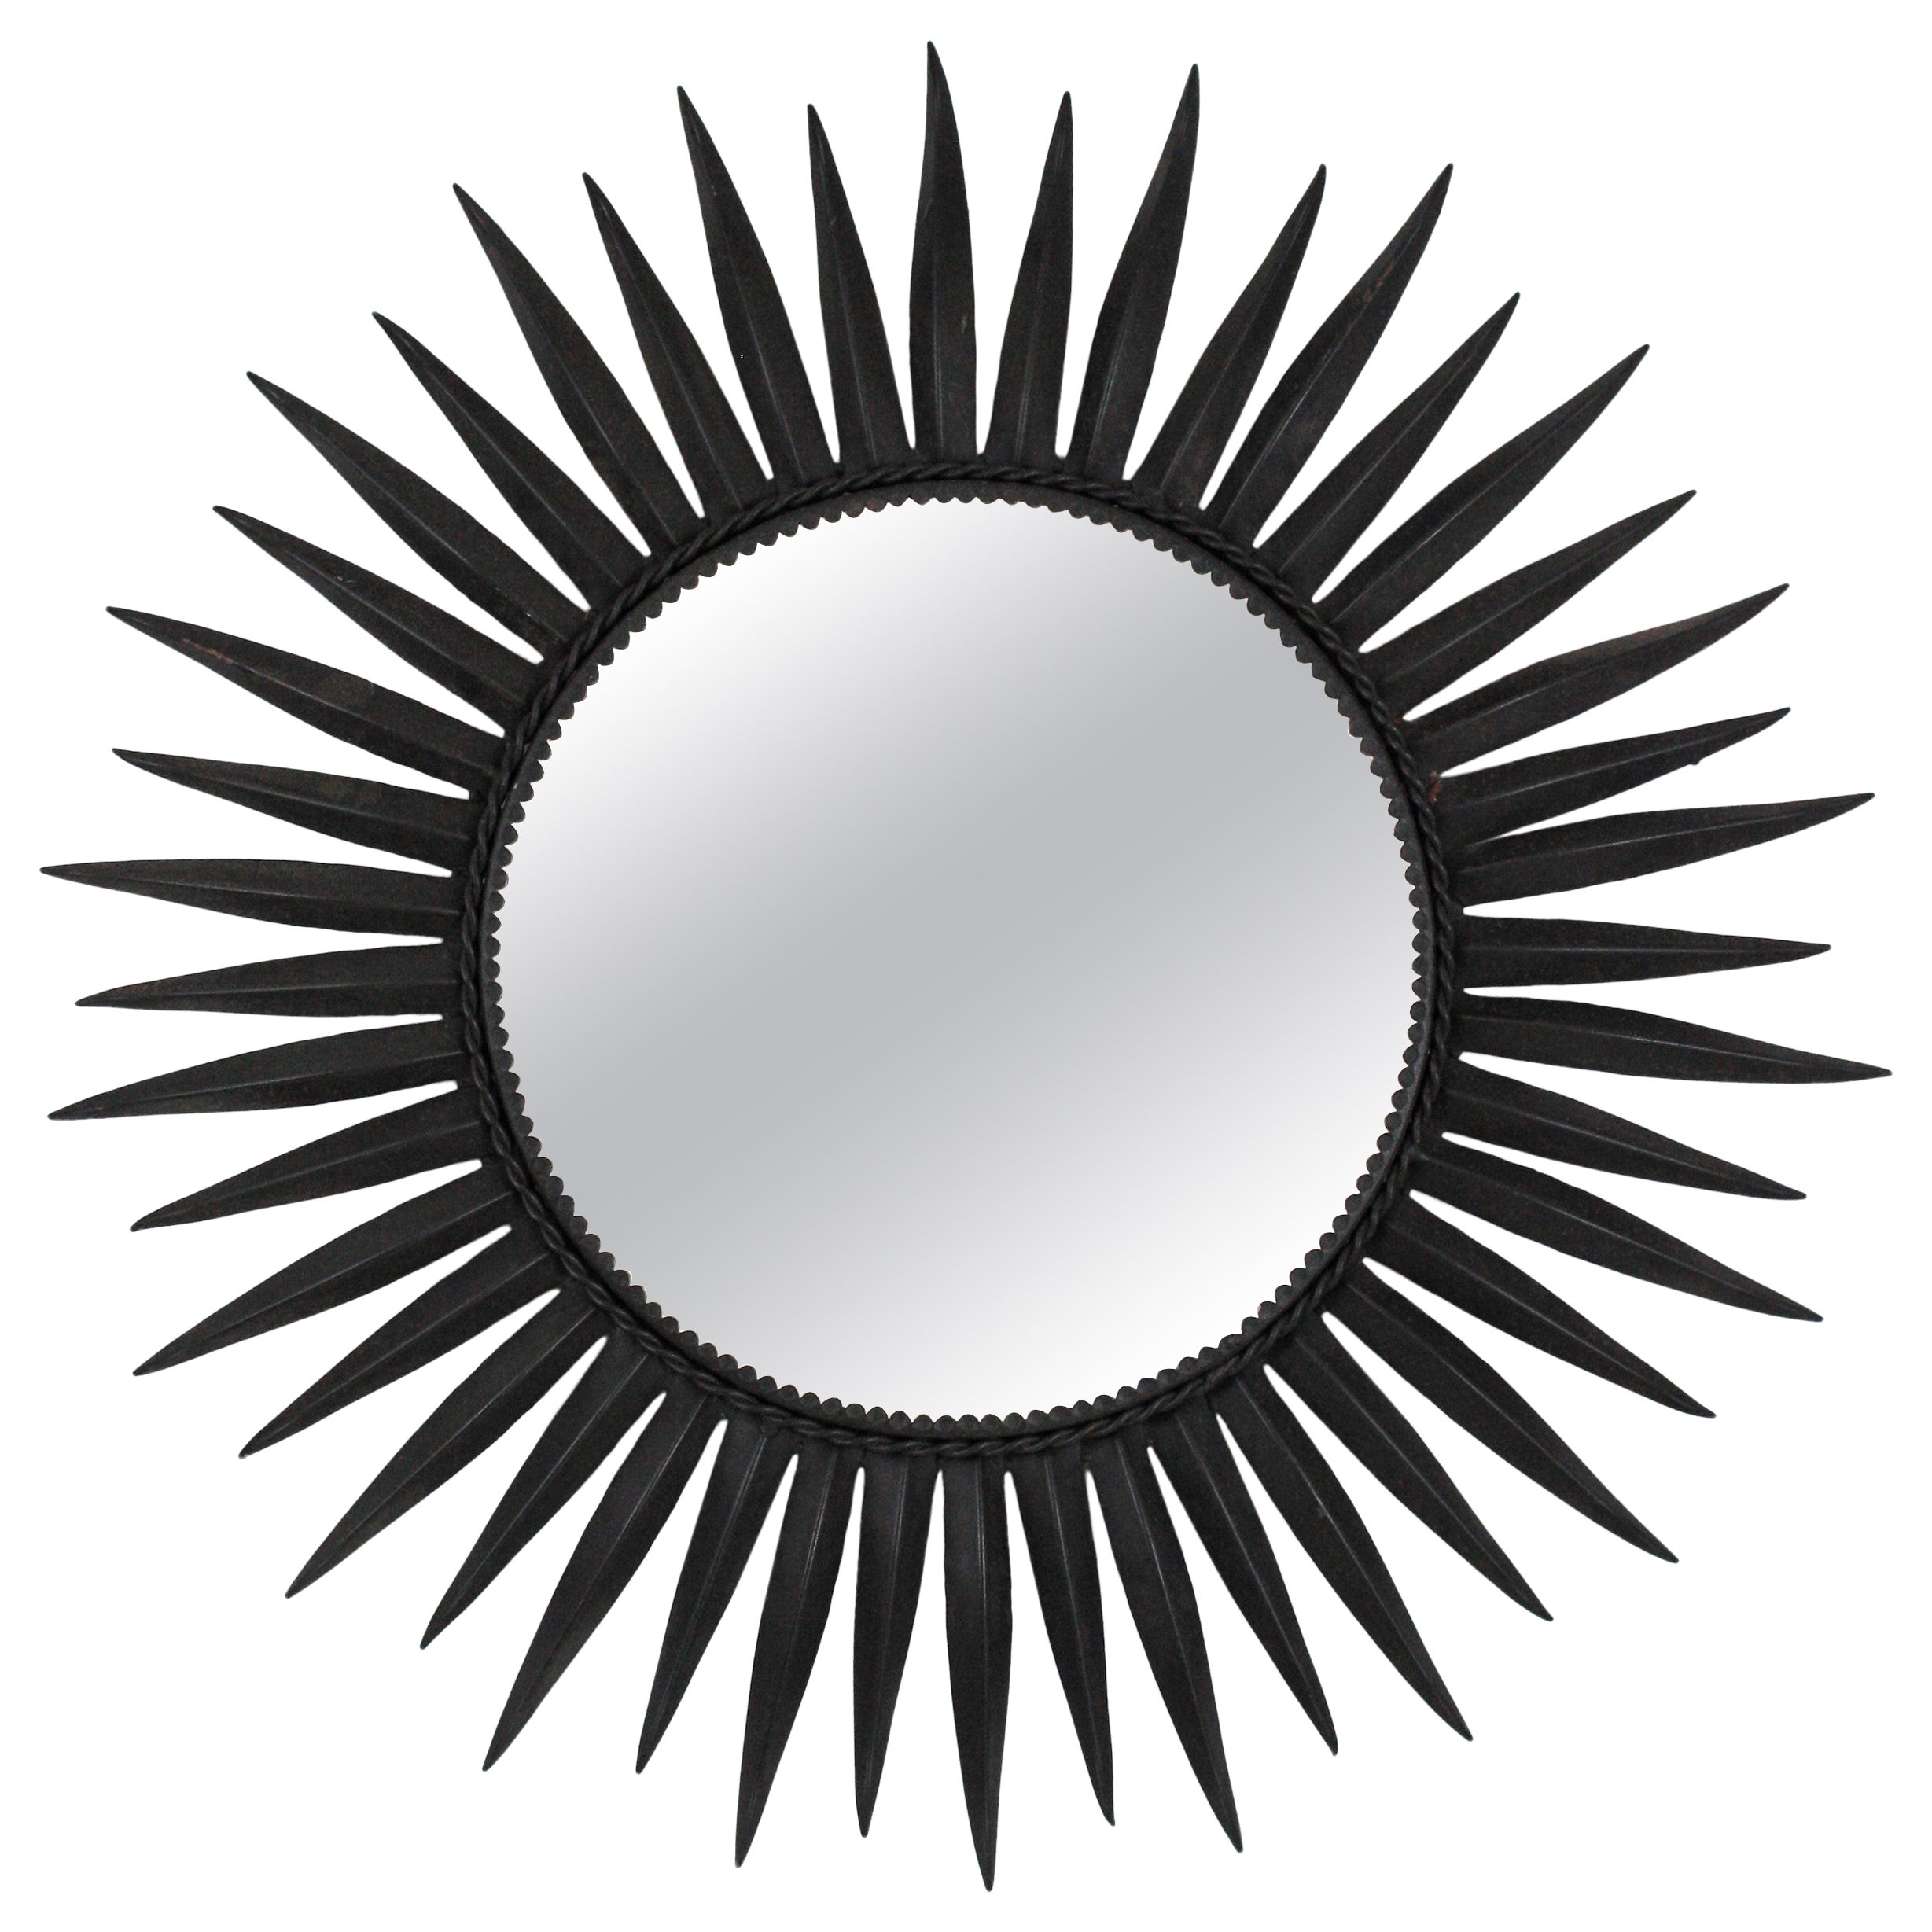 Sunburst Eyelash Mirror in Black Wrought Iron For Sale